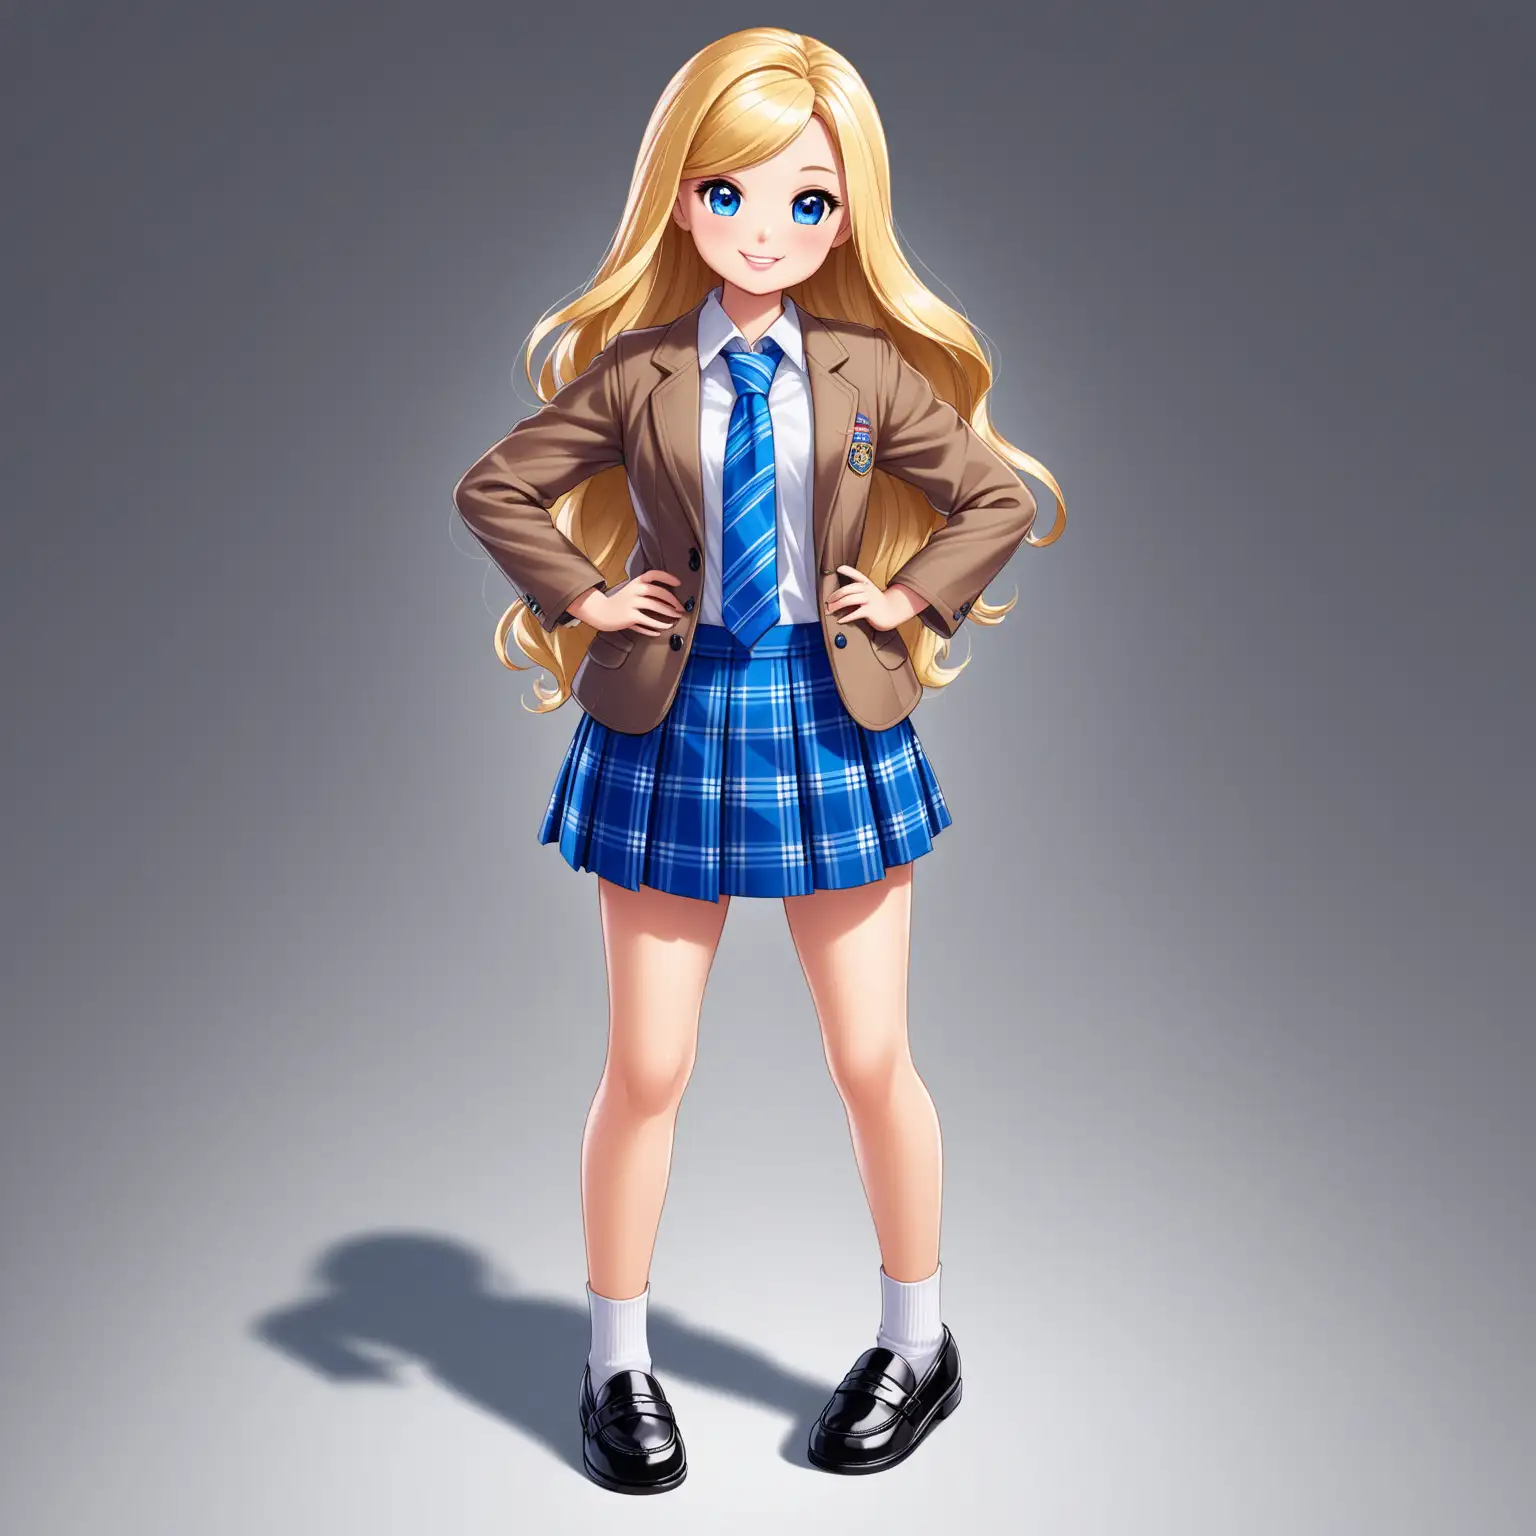 Barbie Blonde Chelsea Fashion Show Pose in School Uniform